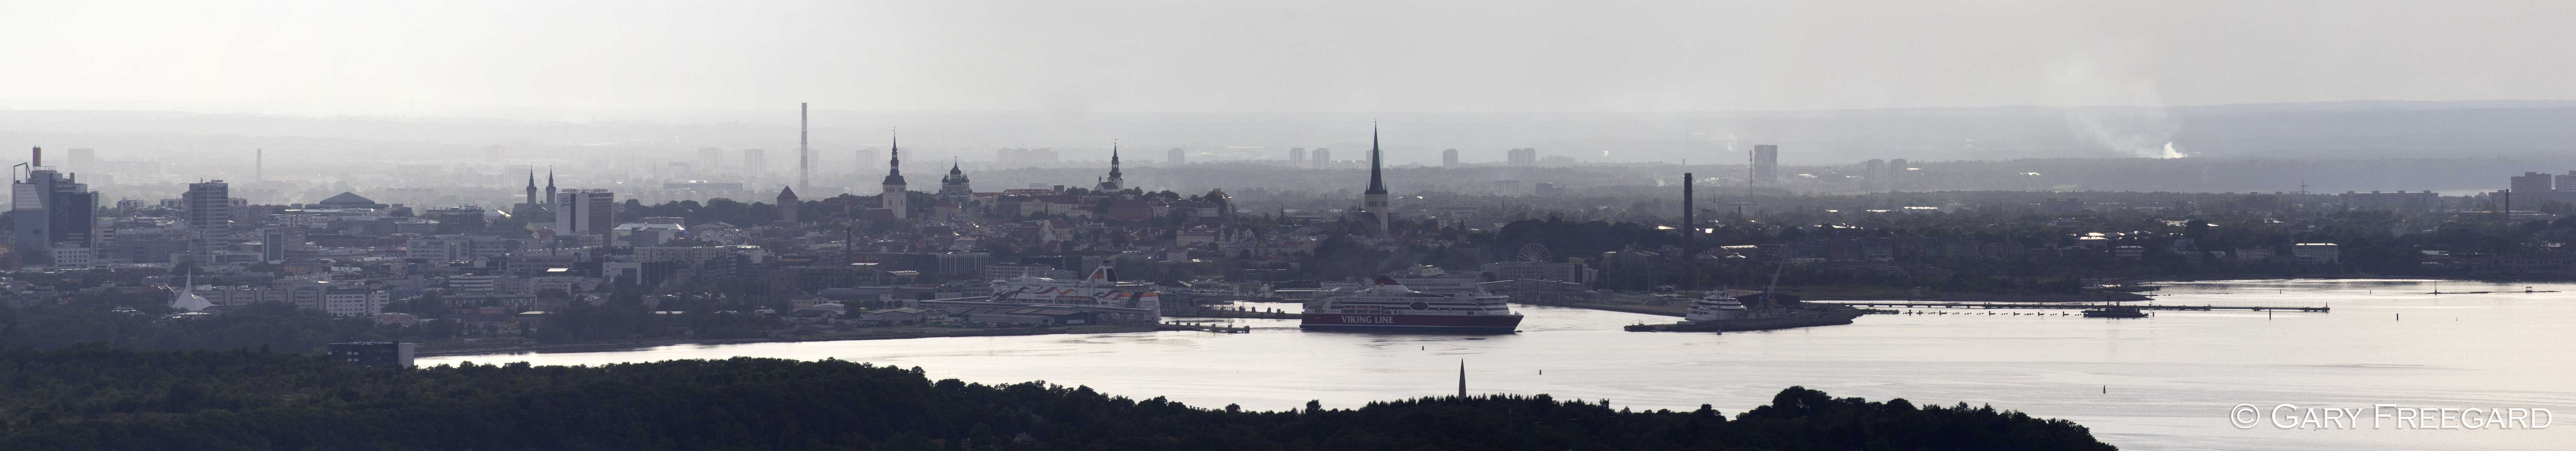 Tallinn_Panorama1.jpg